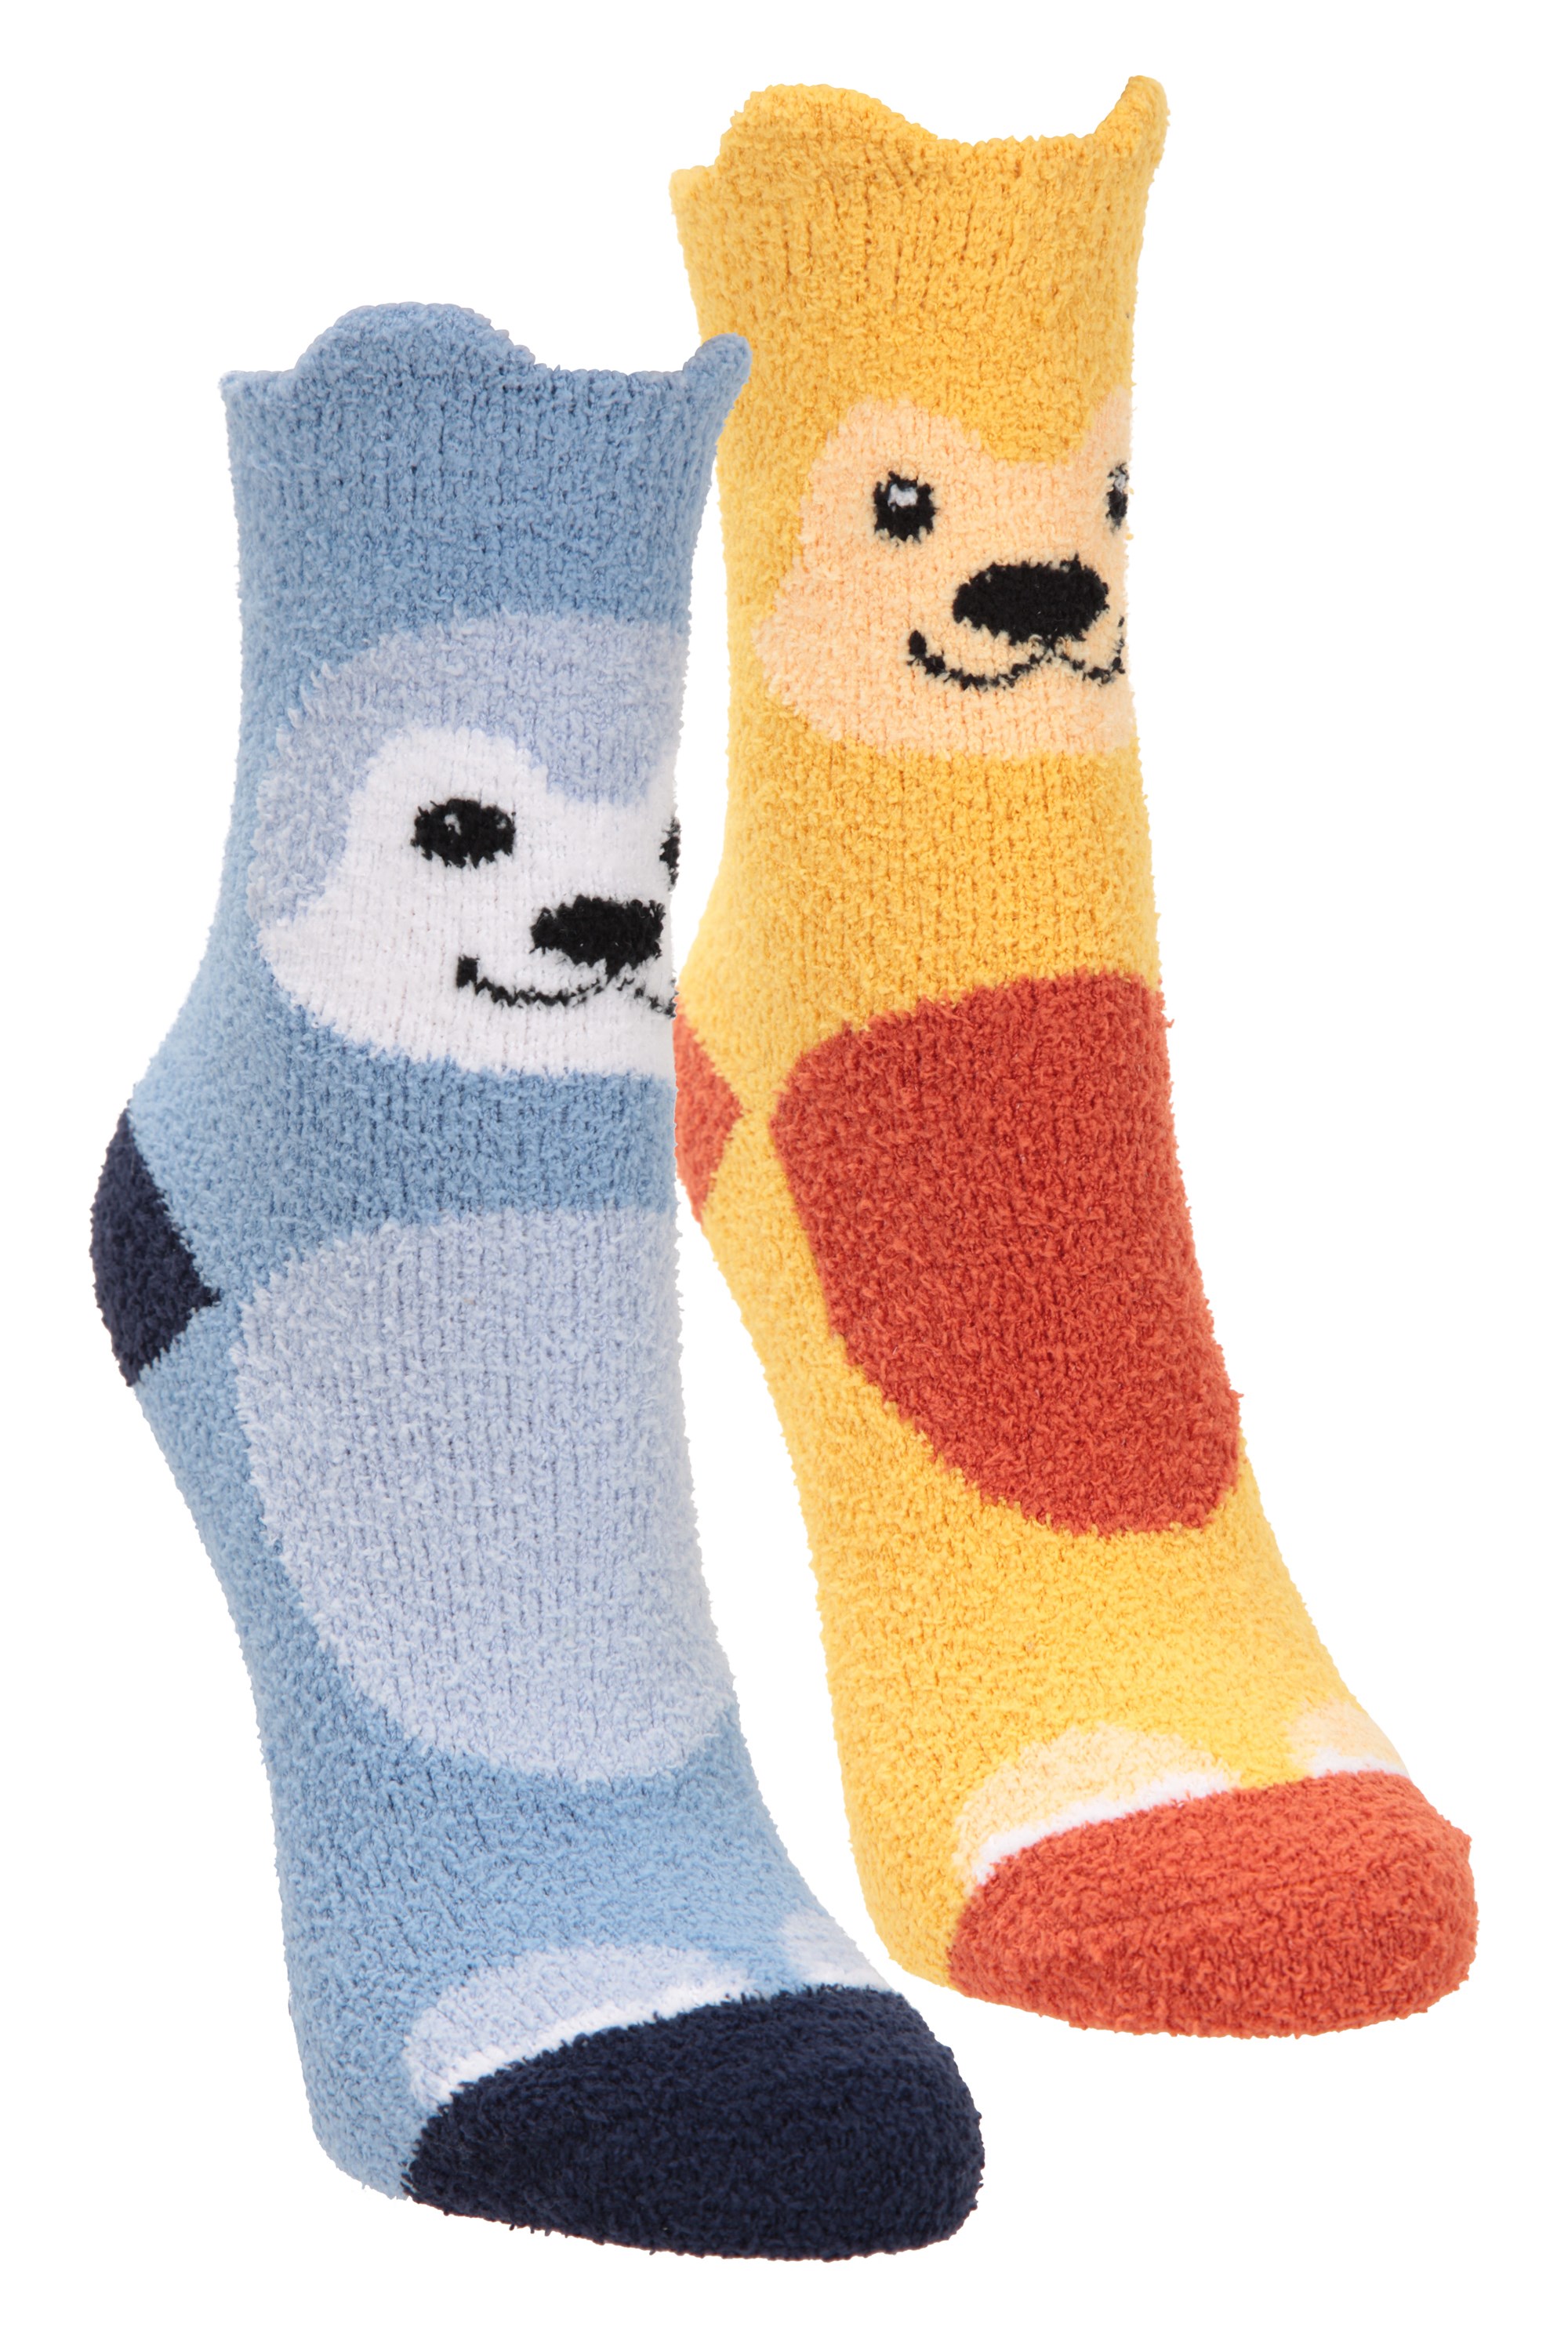 Super Easy Slipper Socks - FREE Crochet Sock Pattern + Video Tutorial by  Yay For Yarn - Yay For Yarn